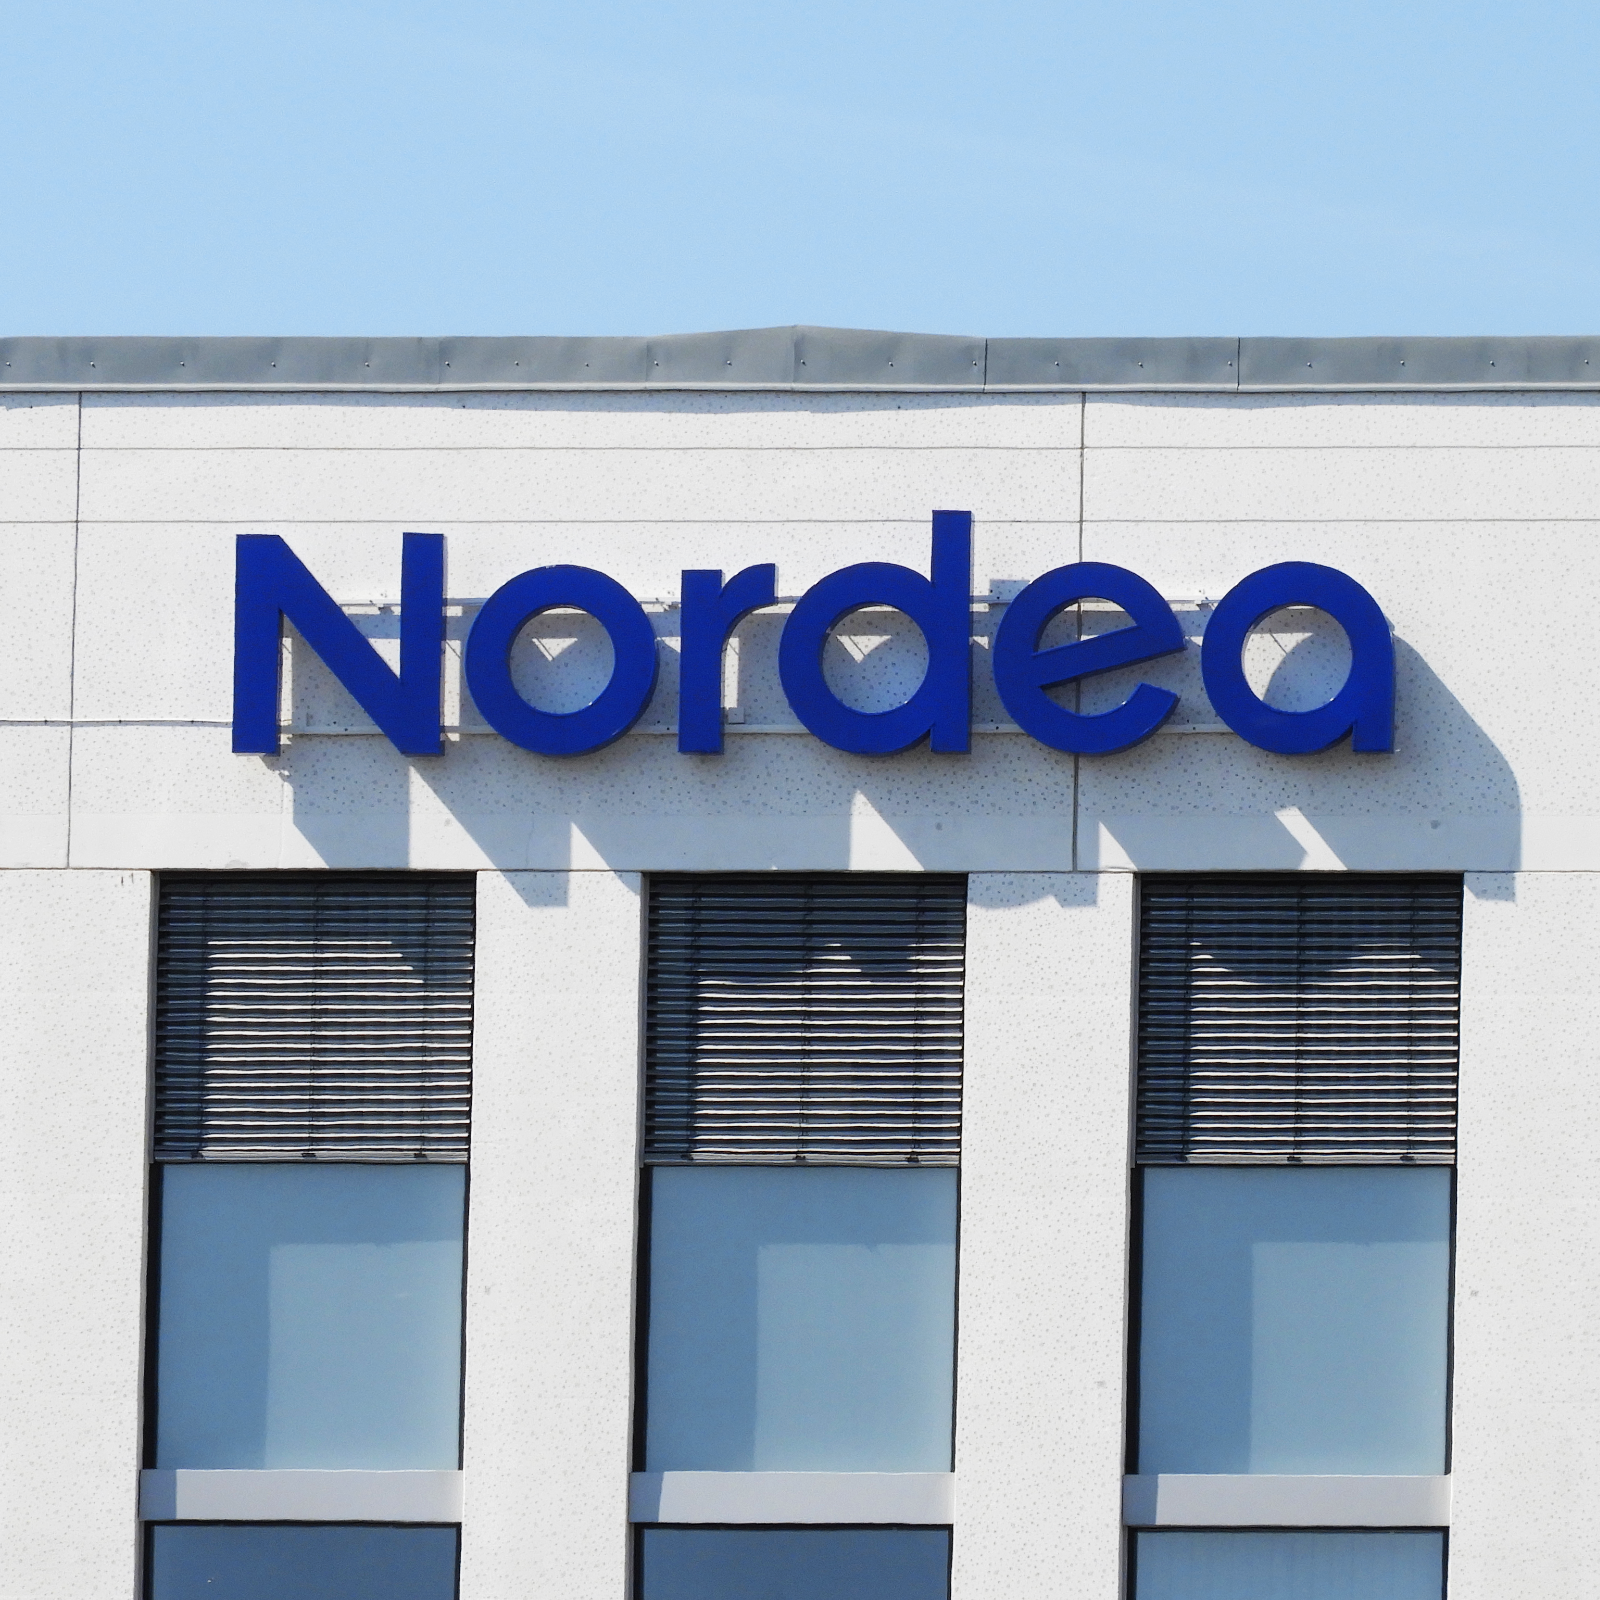 Nordic Region’s Largest Bank Nordea Suspected of Money Laundering